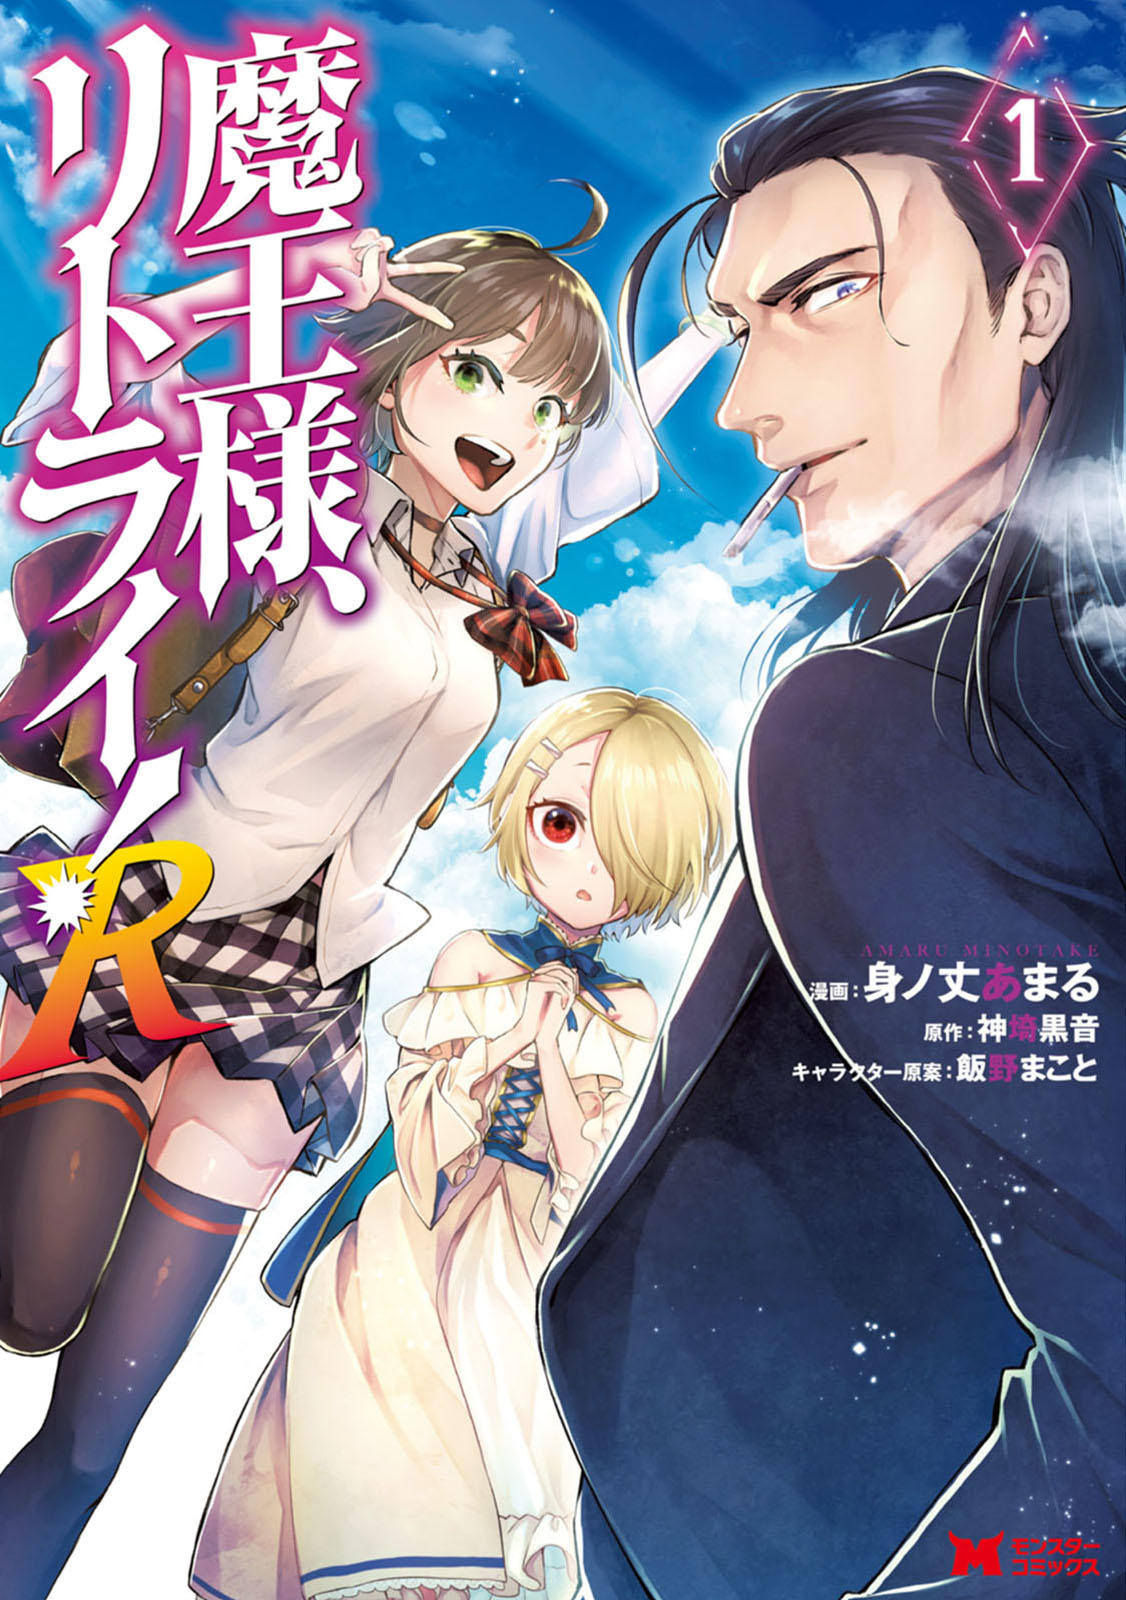 Maou-Sama Retry Manga Chapter 1